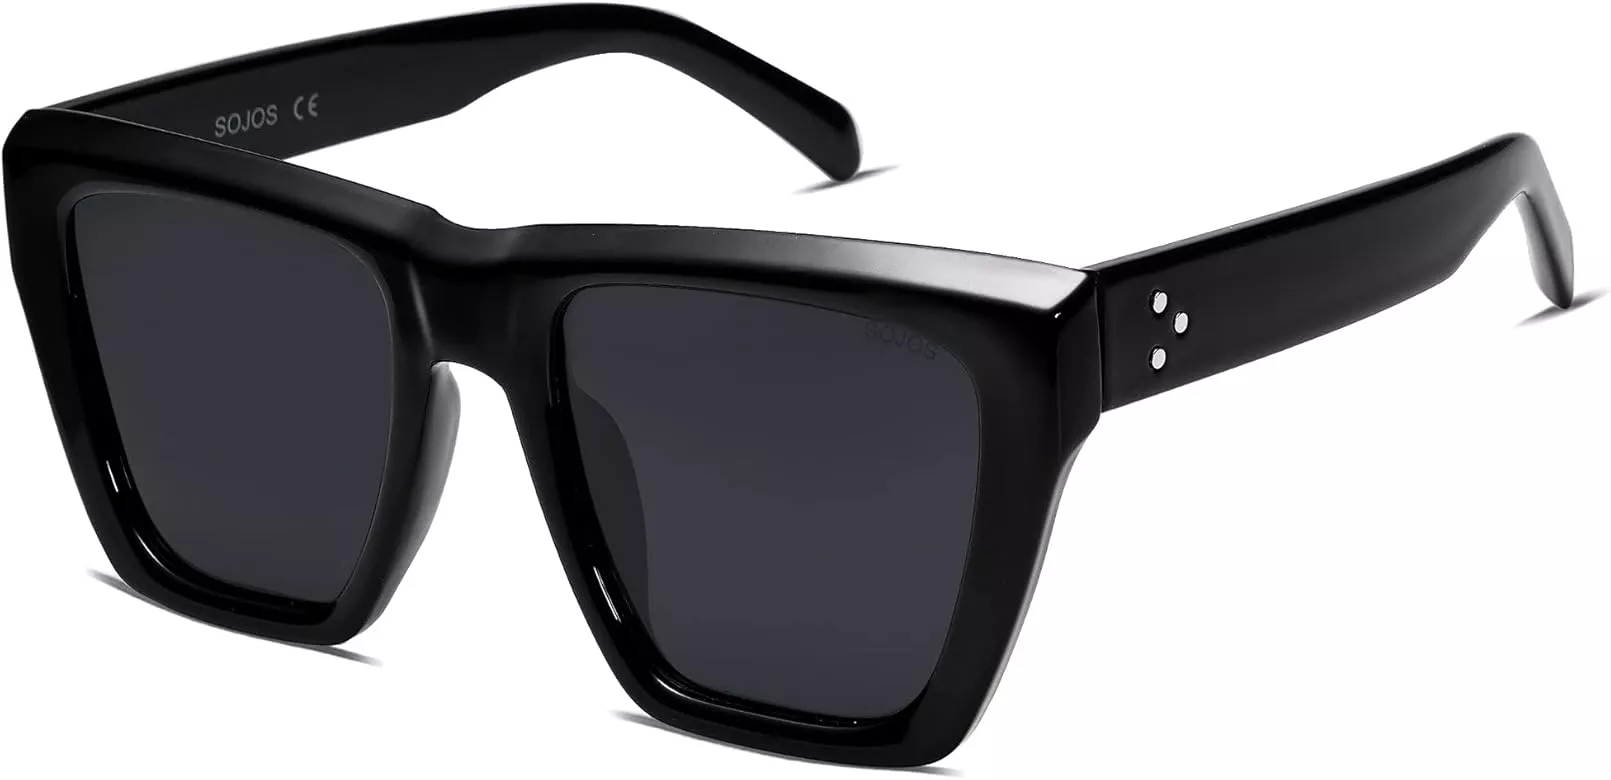 Myiaur Fashion Sunglasses for Women Polarized Driving Anti Glare UV400  Protection Stylish Design